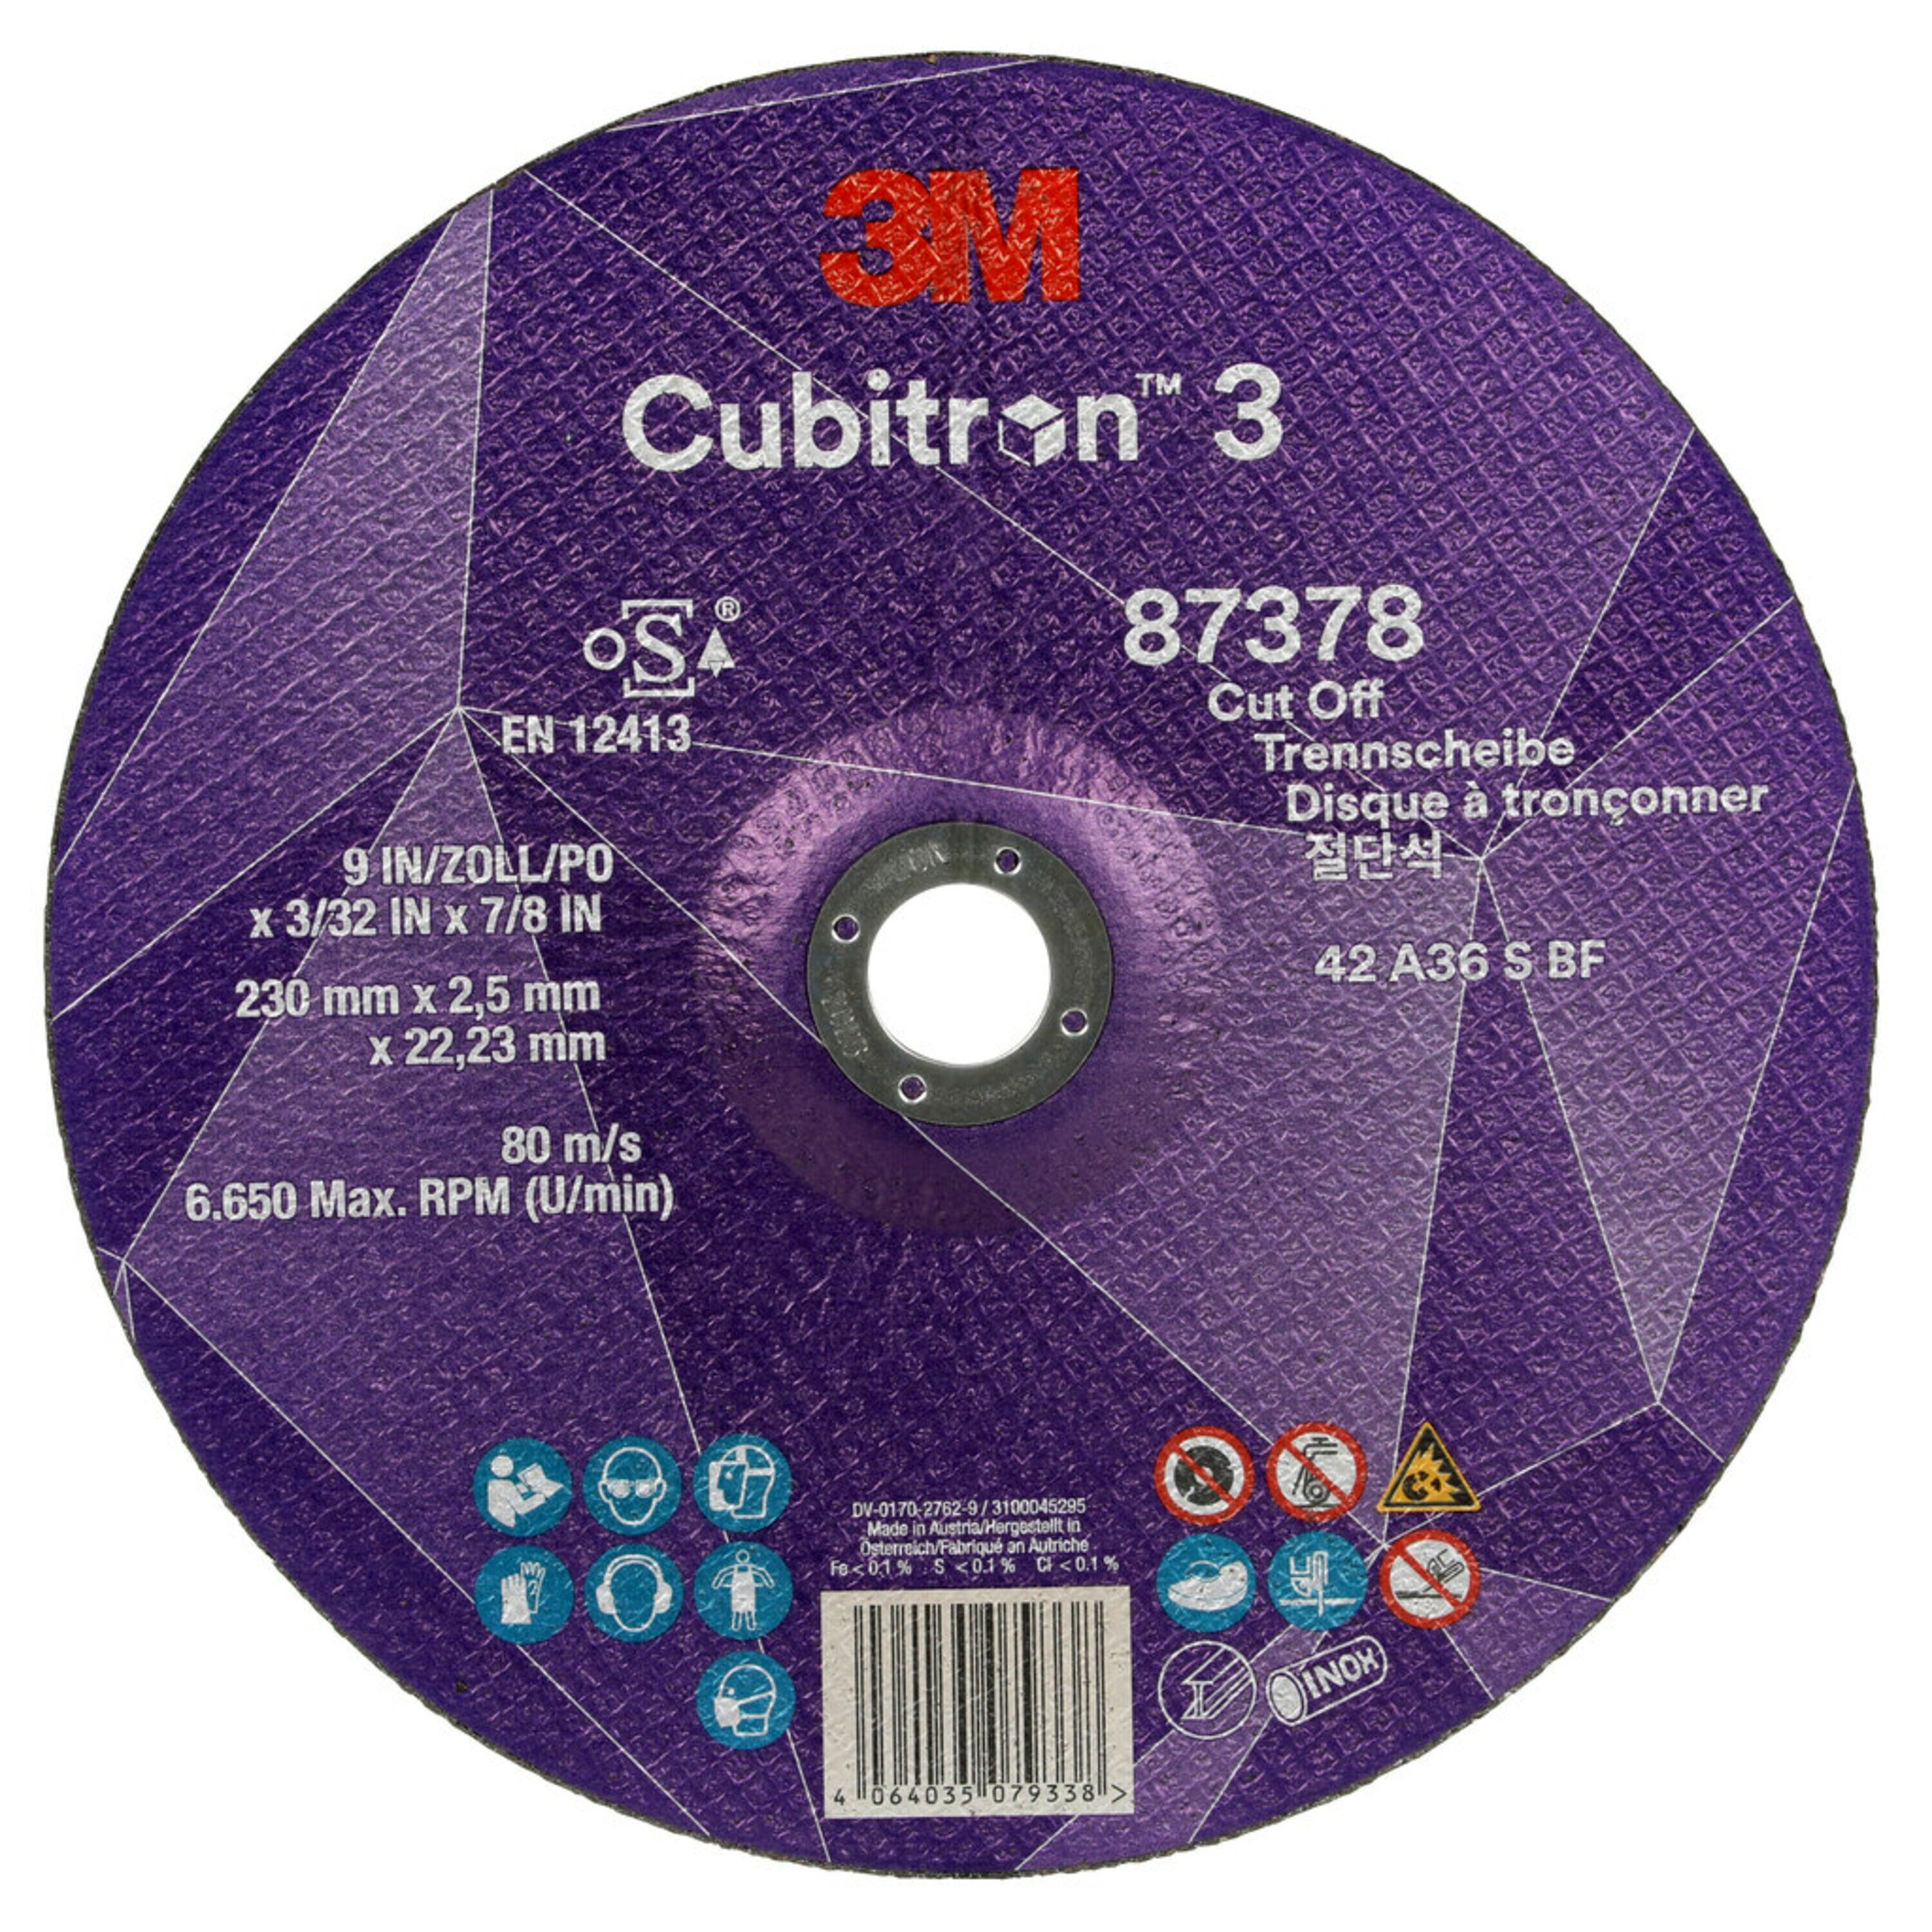 3M Cubitron 3 cut-off wheel, 230 mm, 2.5 mm, 22.23 mm, 36 , type 42 #87378